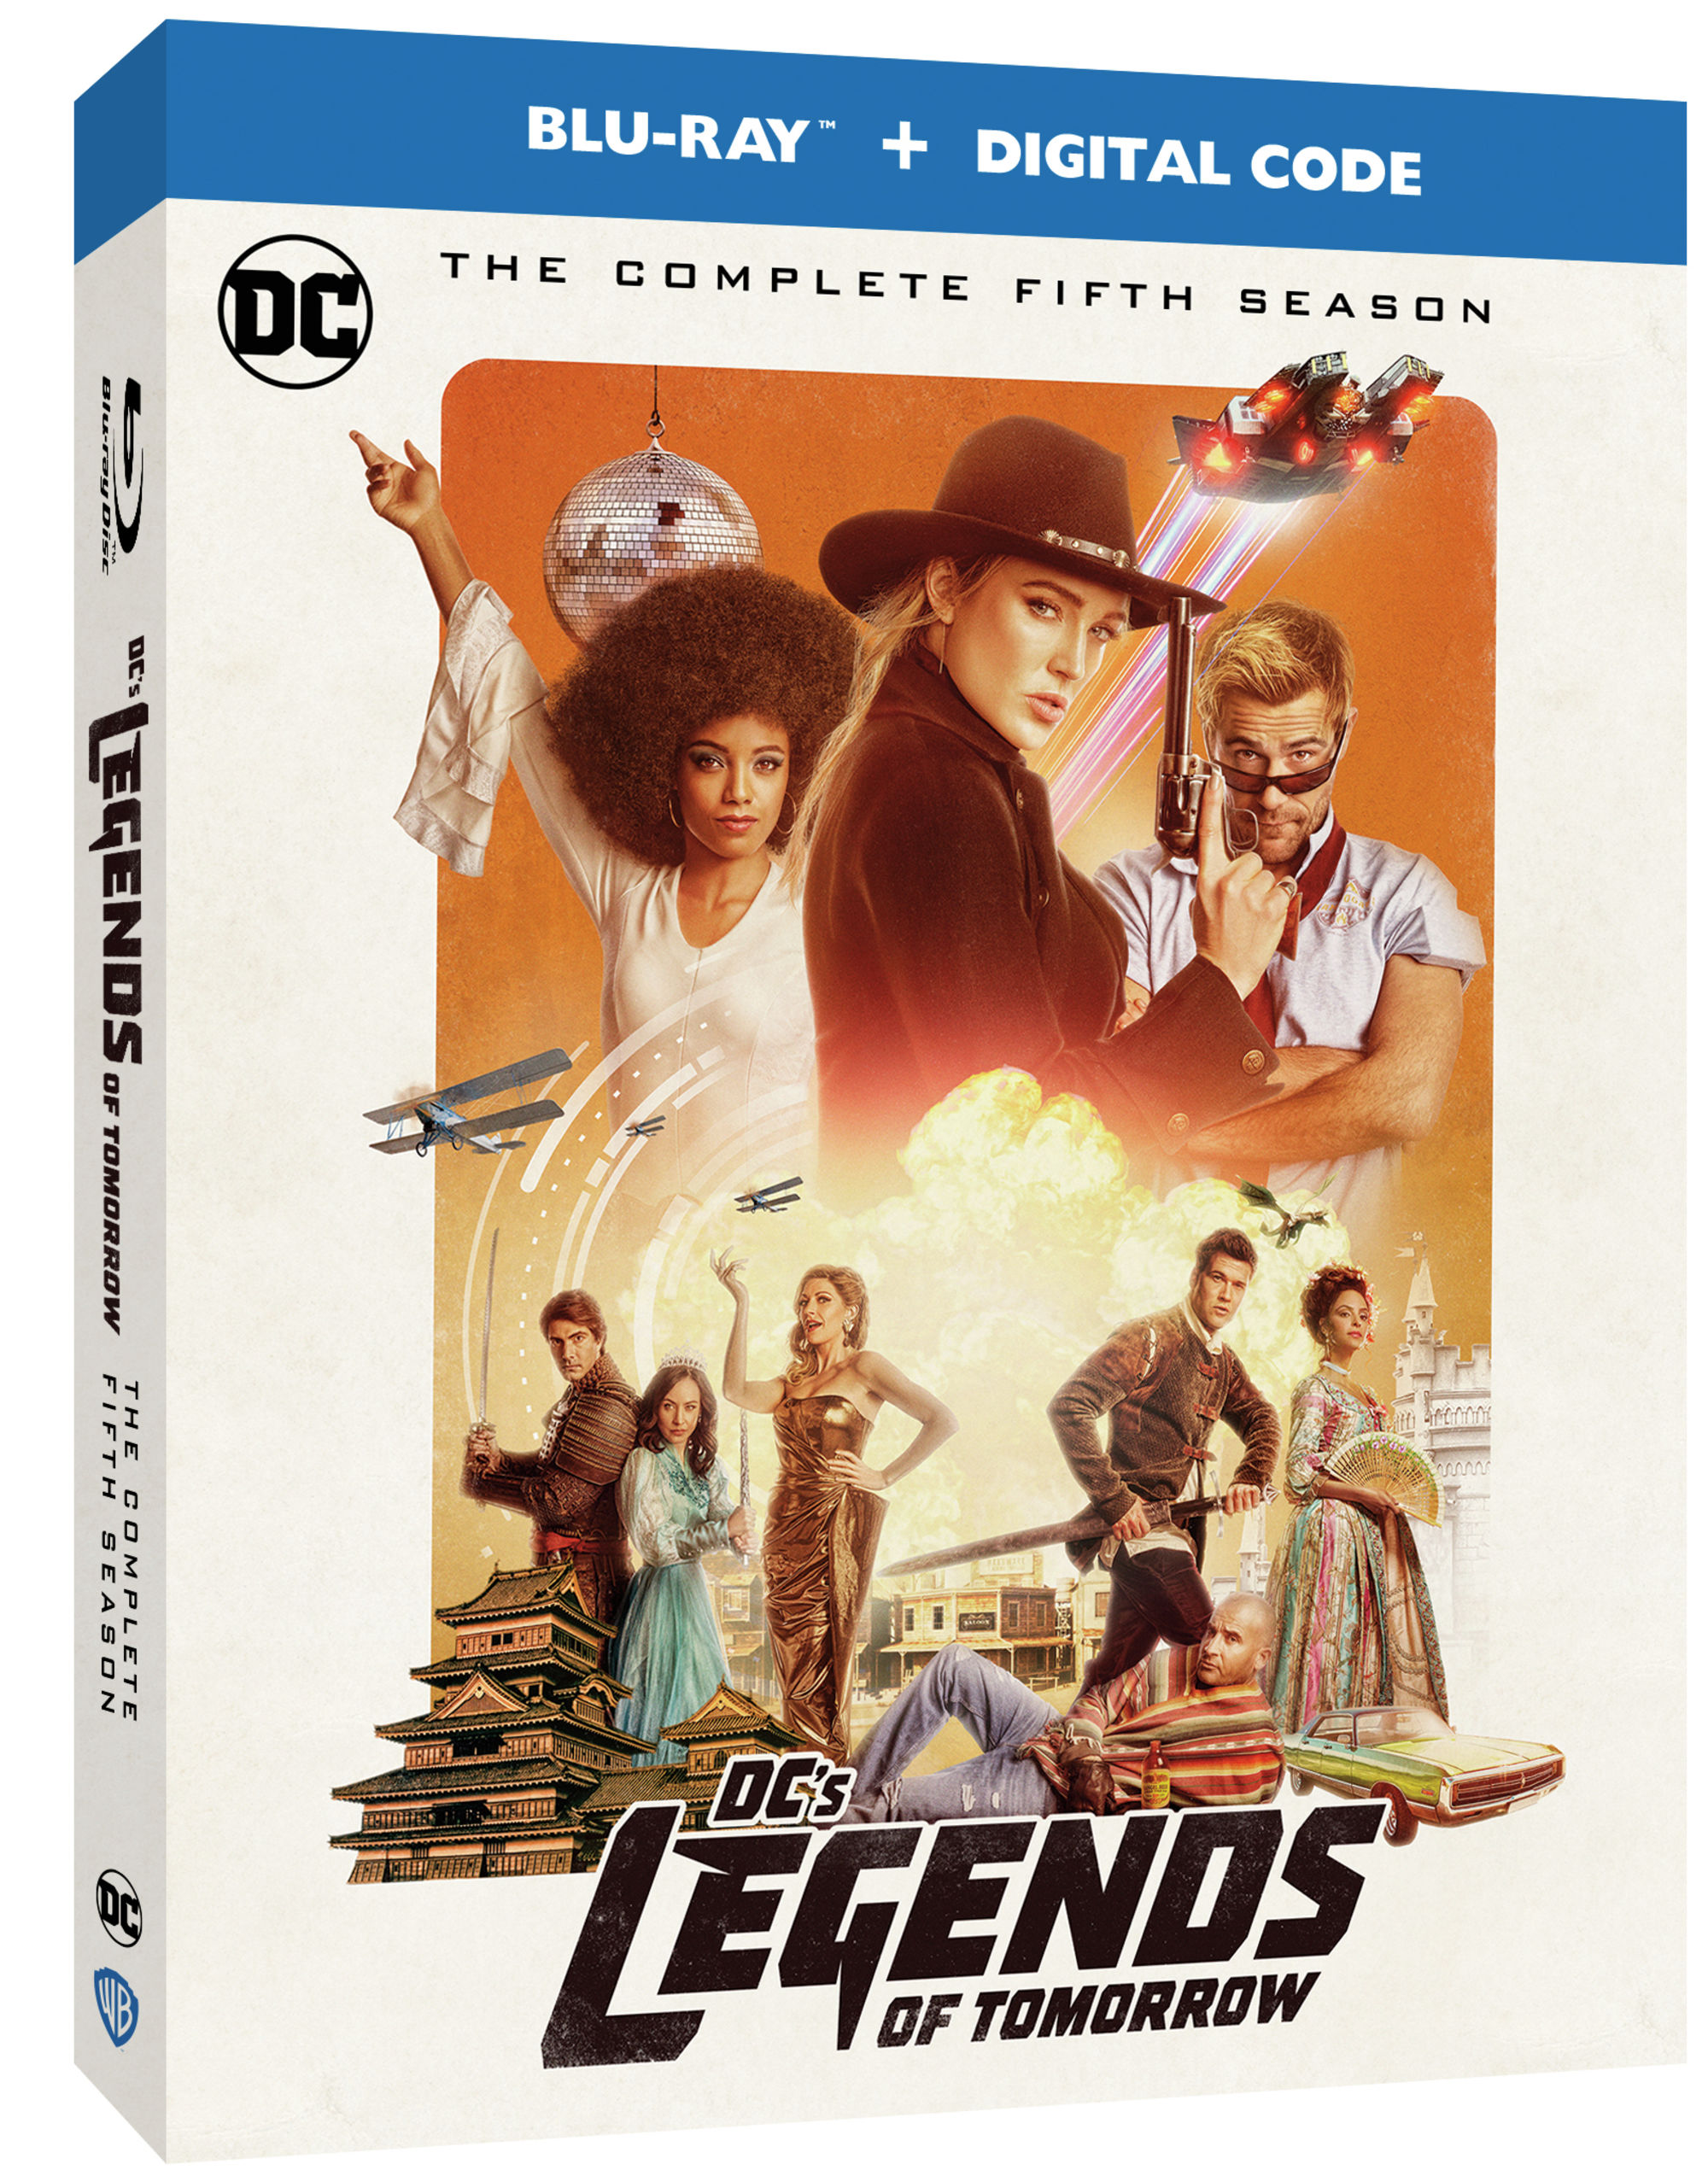 Legends of Tomorrow Season 5 Blu-ray DVD